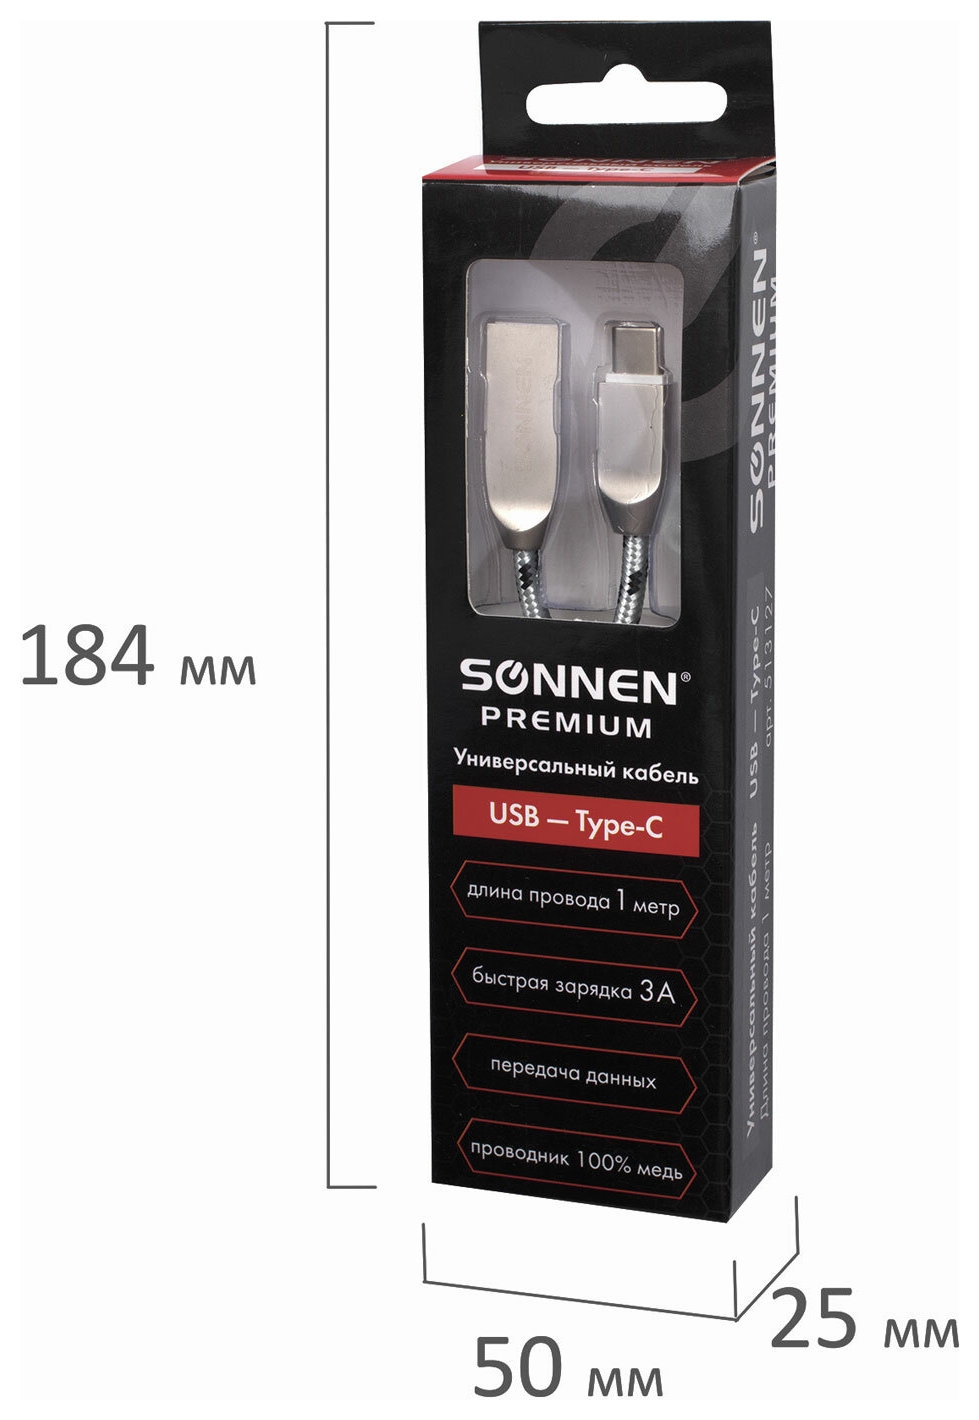 Кабель USB 2.0-type-c, 1 м, Sonnen Premium, медь, передача данных и быстрая зарядка, 513127